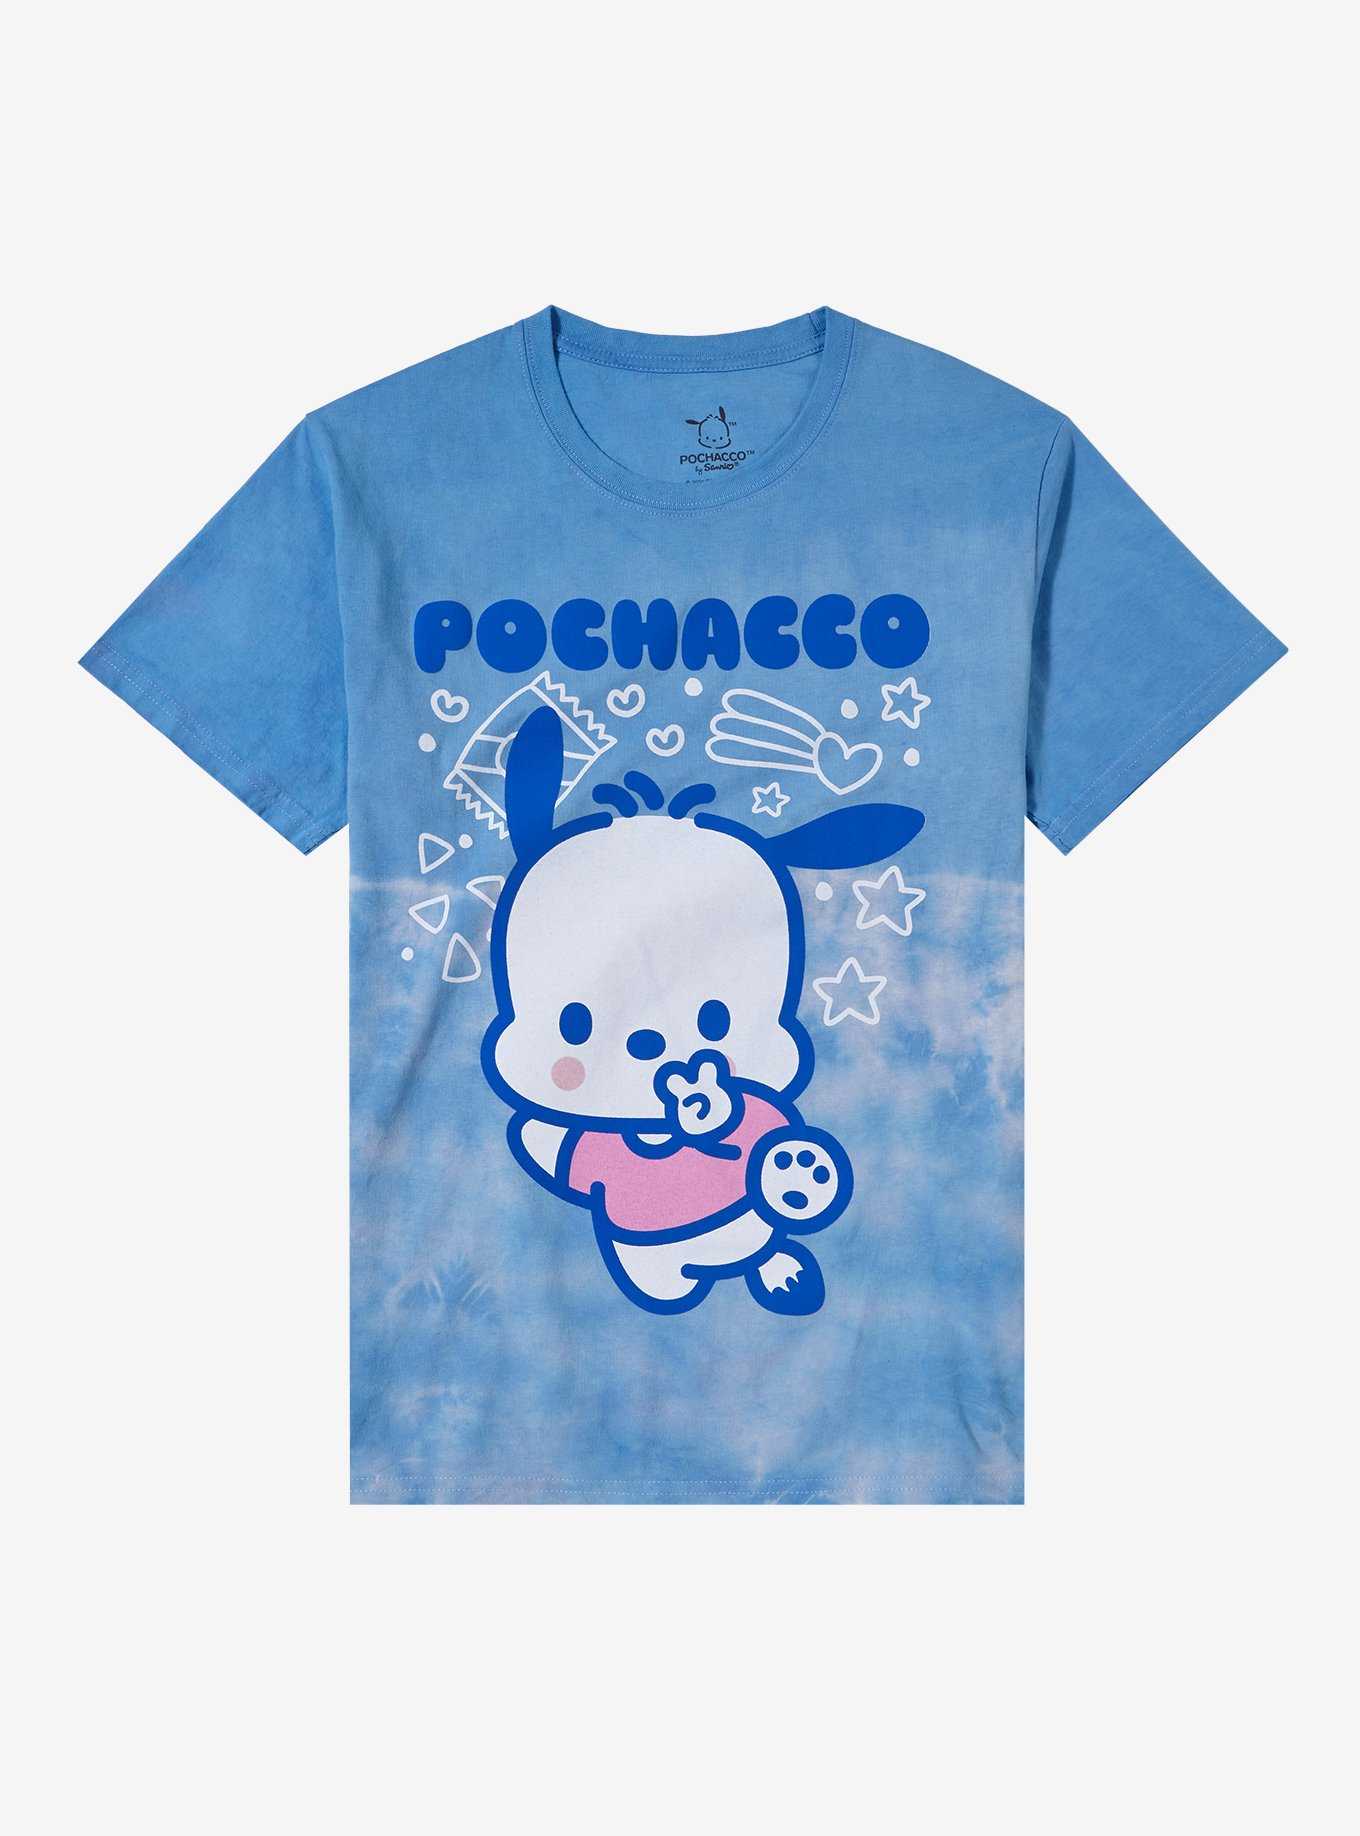 Pochacco Tie-Dye Boyfriend Fit Girls T-Shirt, , hi-res